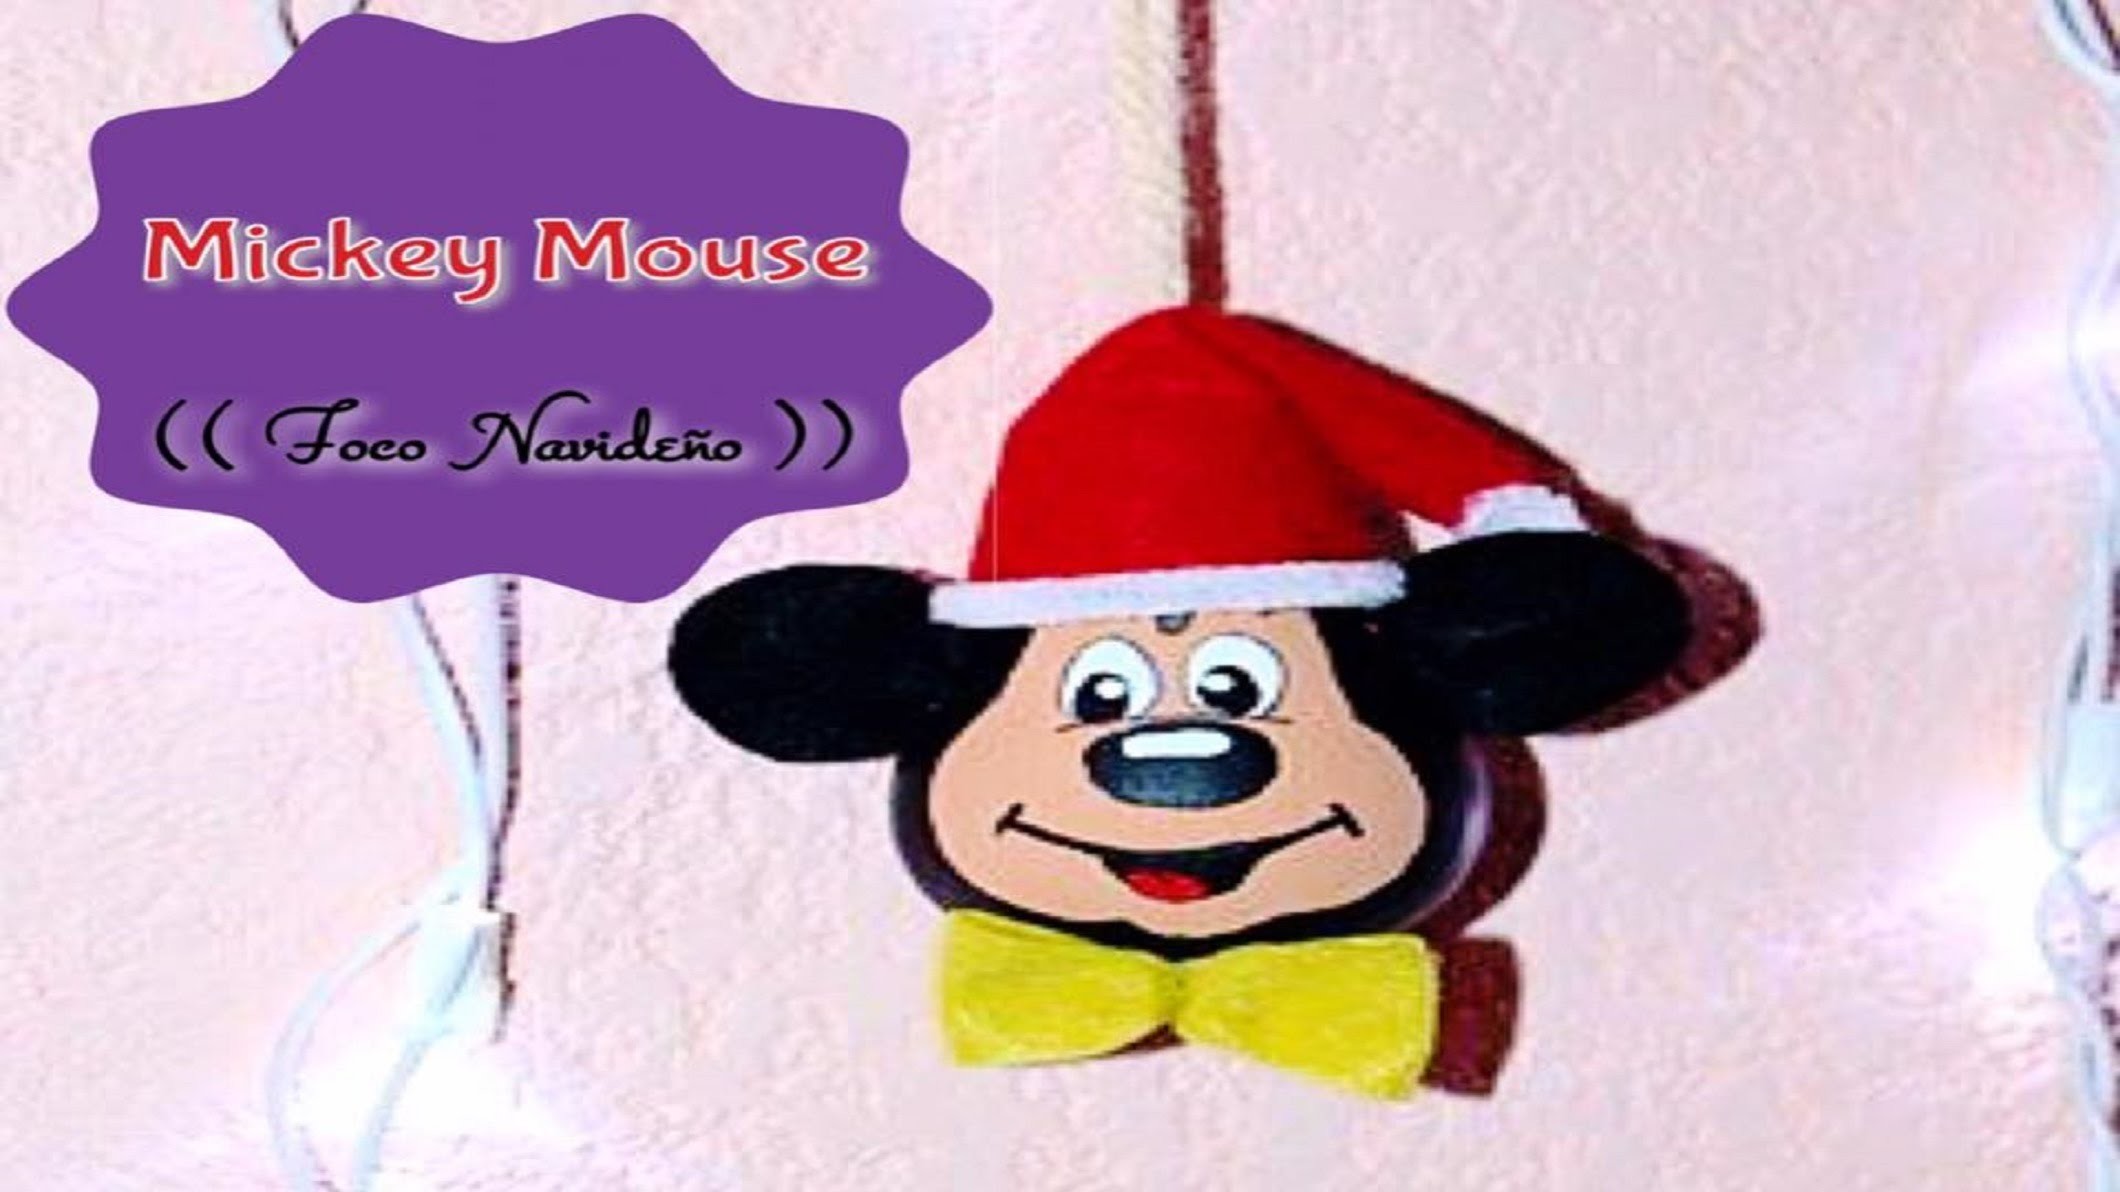 Mickey Mouse (( Foco Navideño ))